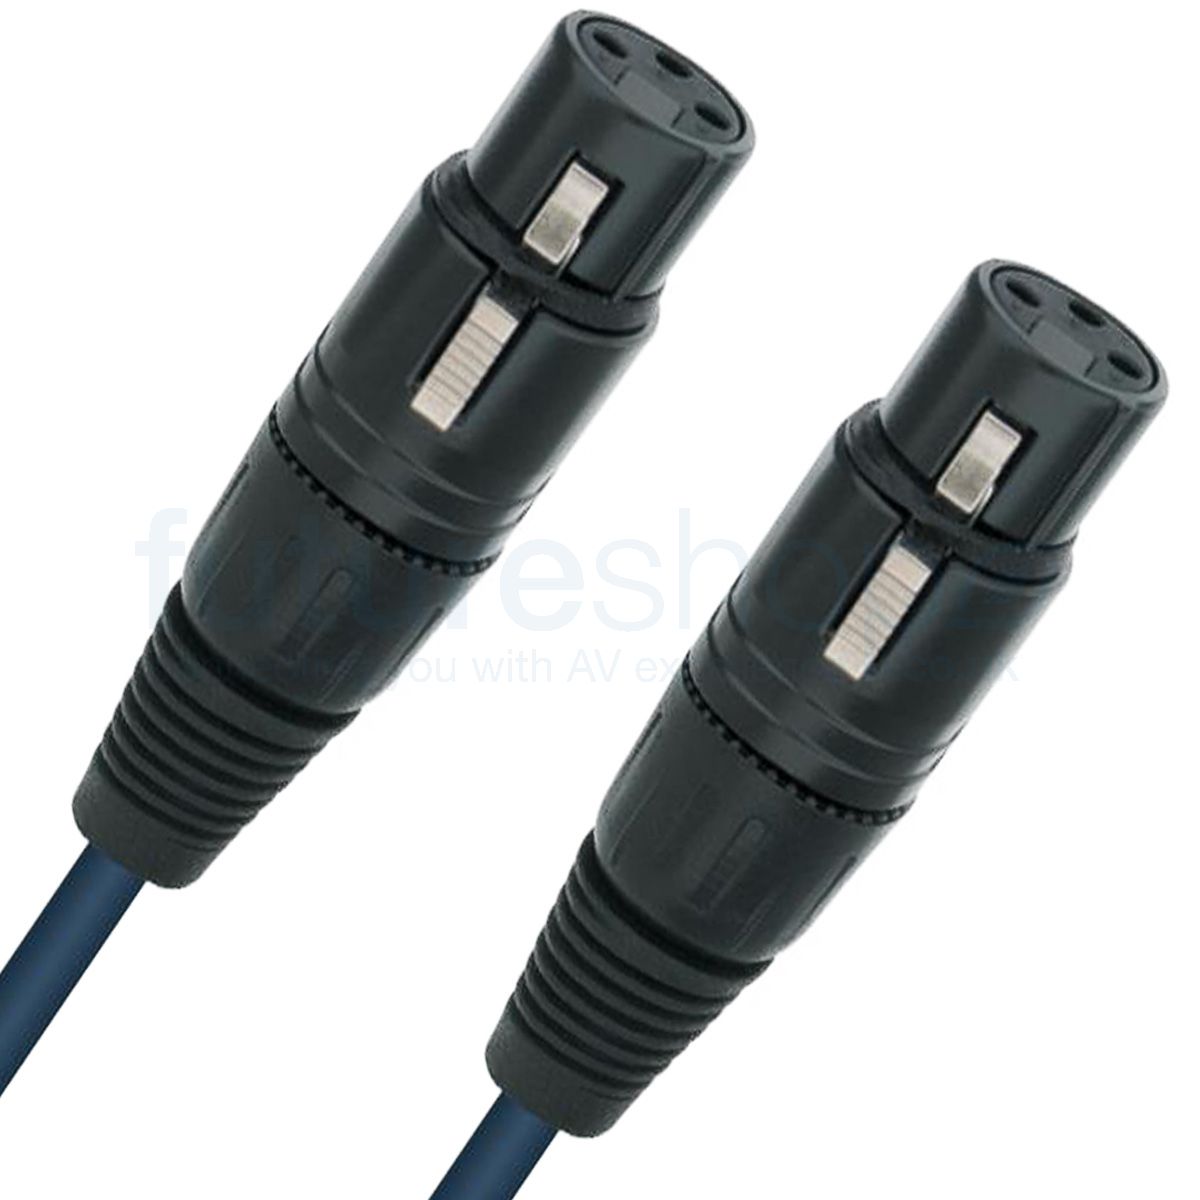 Wireworld Luna 8 2 XLR to 2 XLR Audio Cable Pair   Future Shop